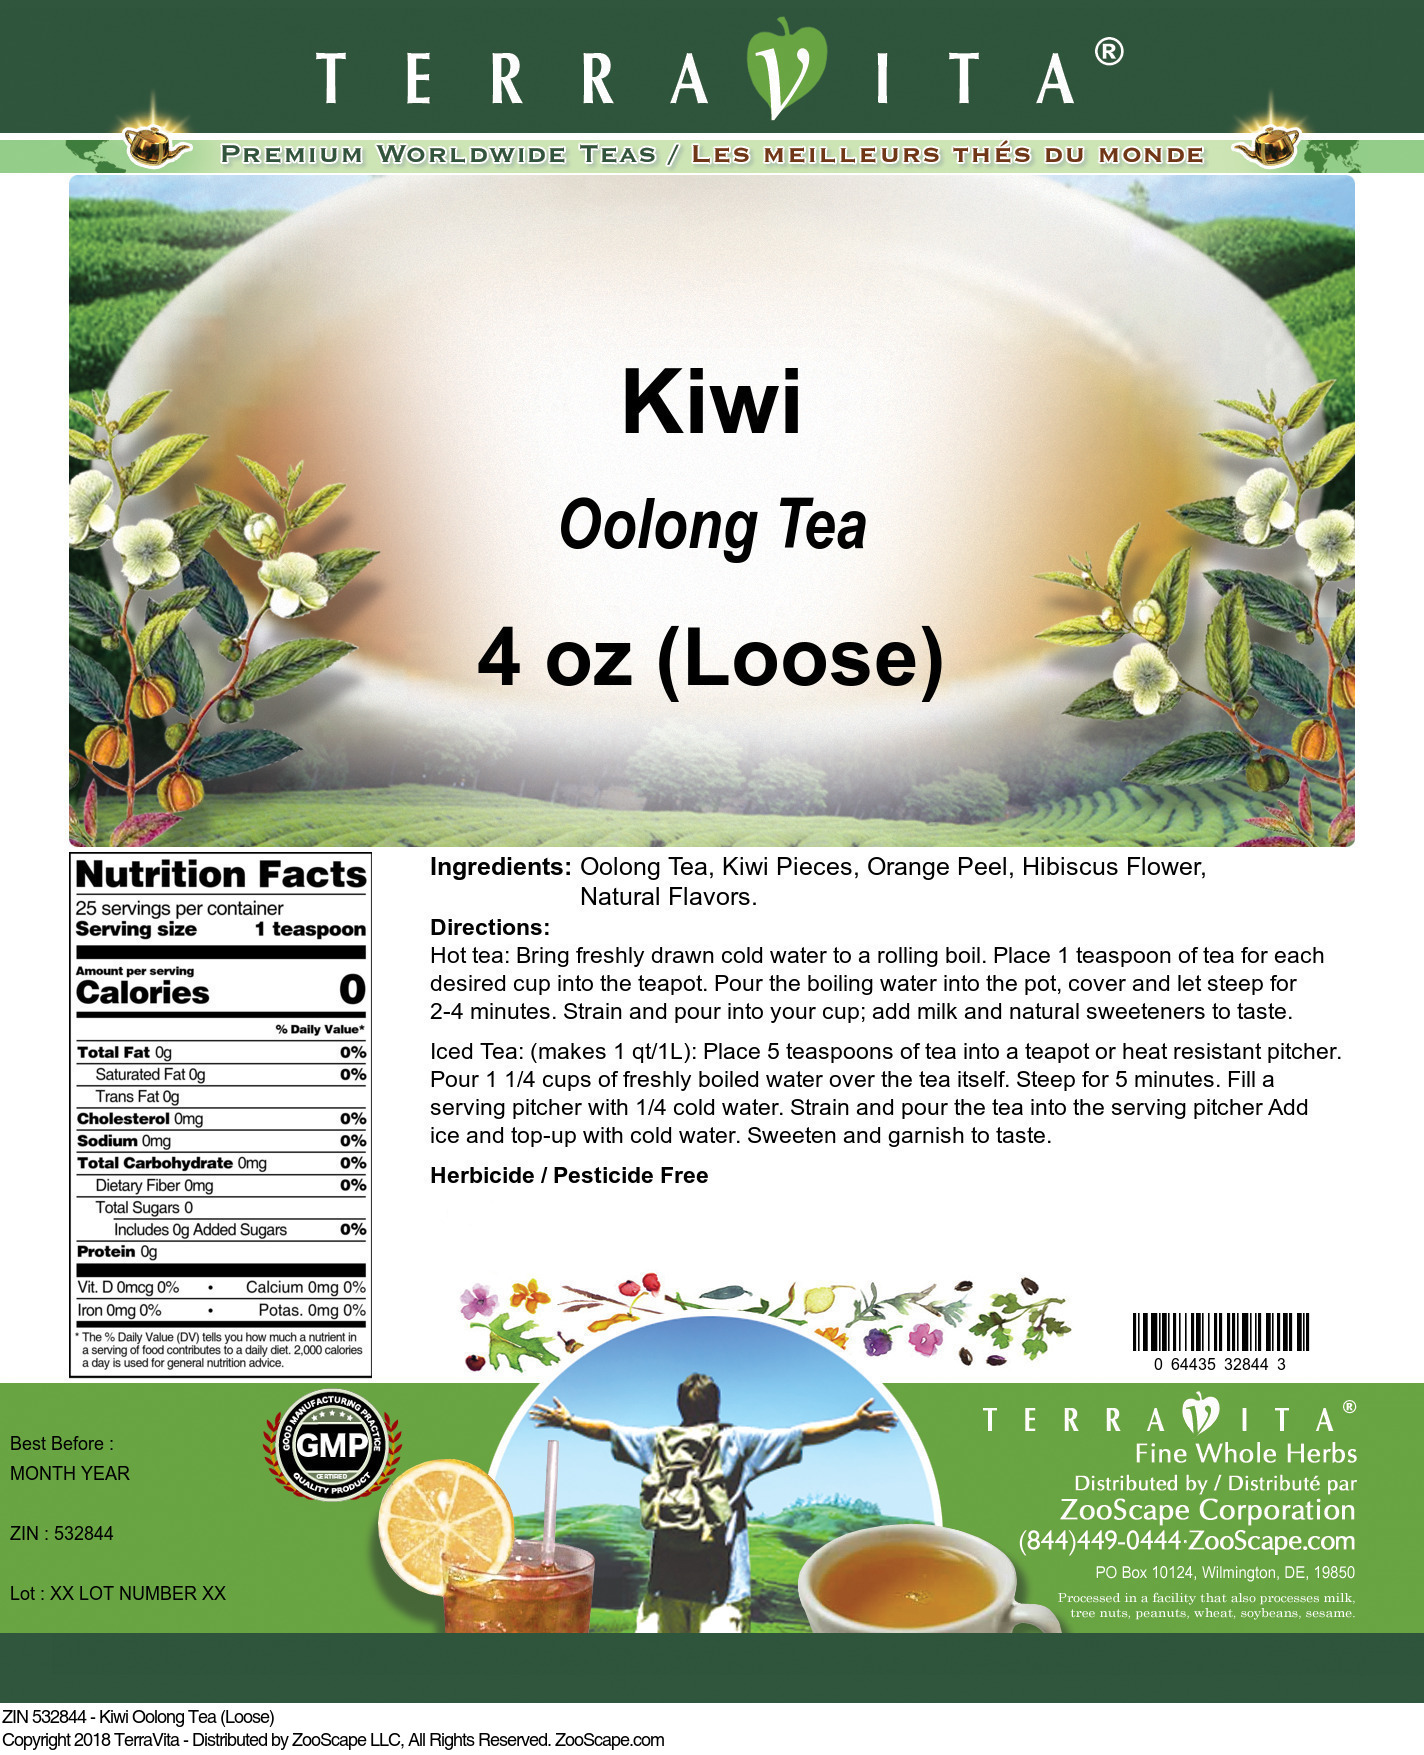 Kiwi Oolong Tea (Loose) - Label